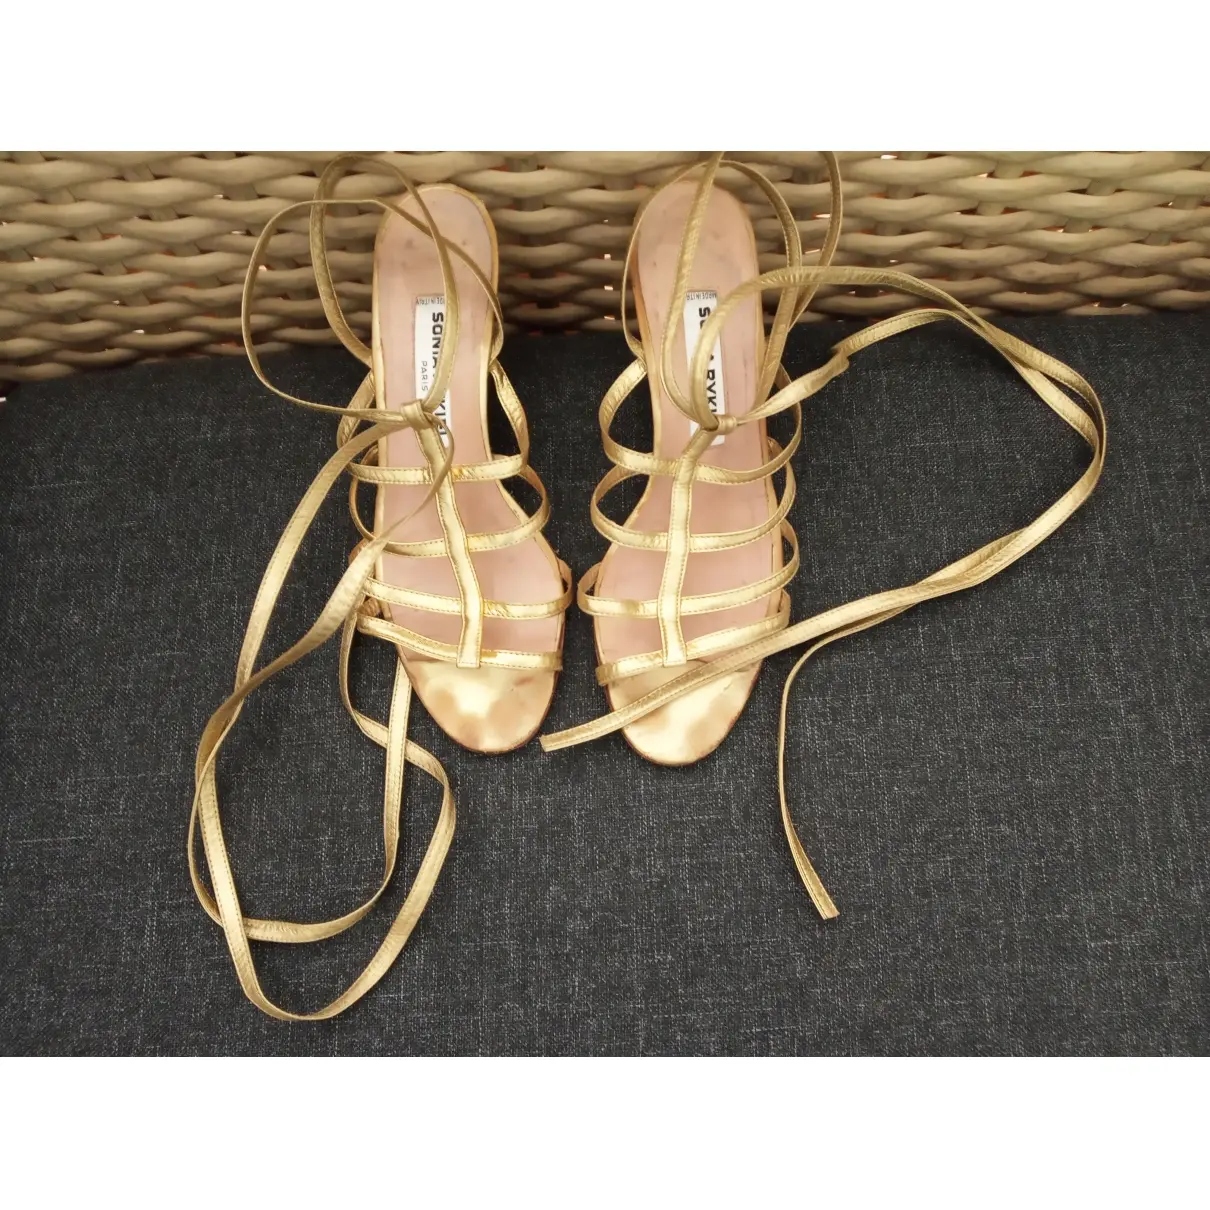 Sonia Rykiel Leather sandal for sale - Vintage